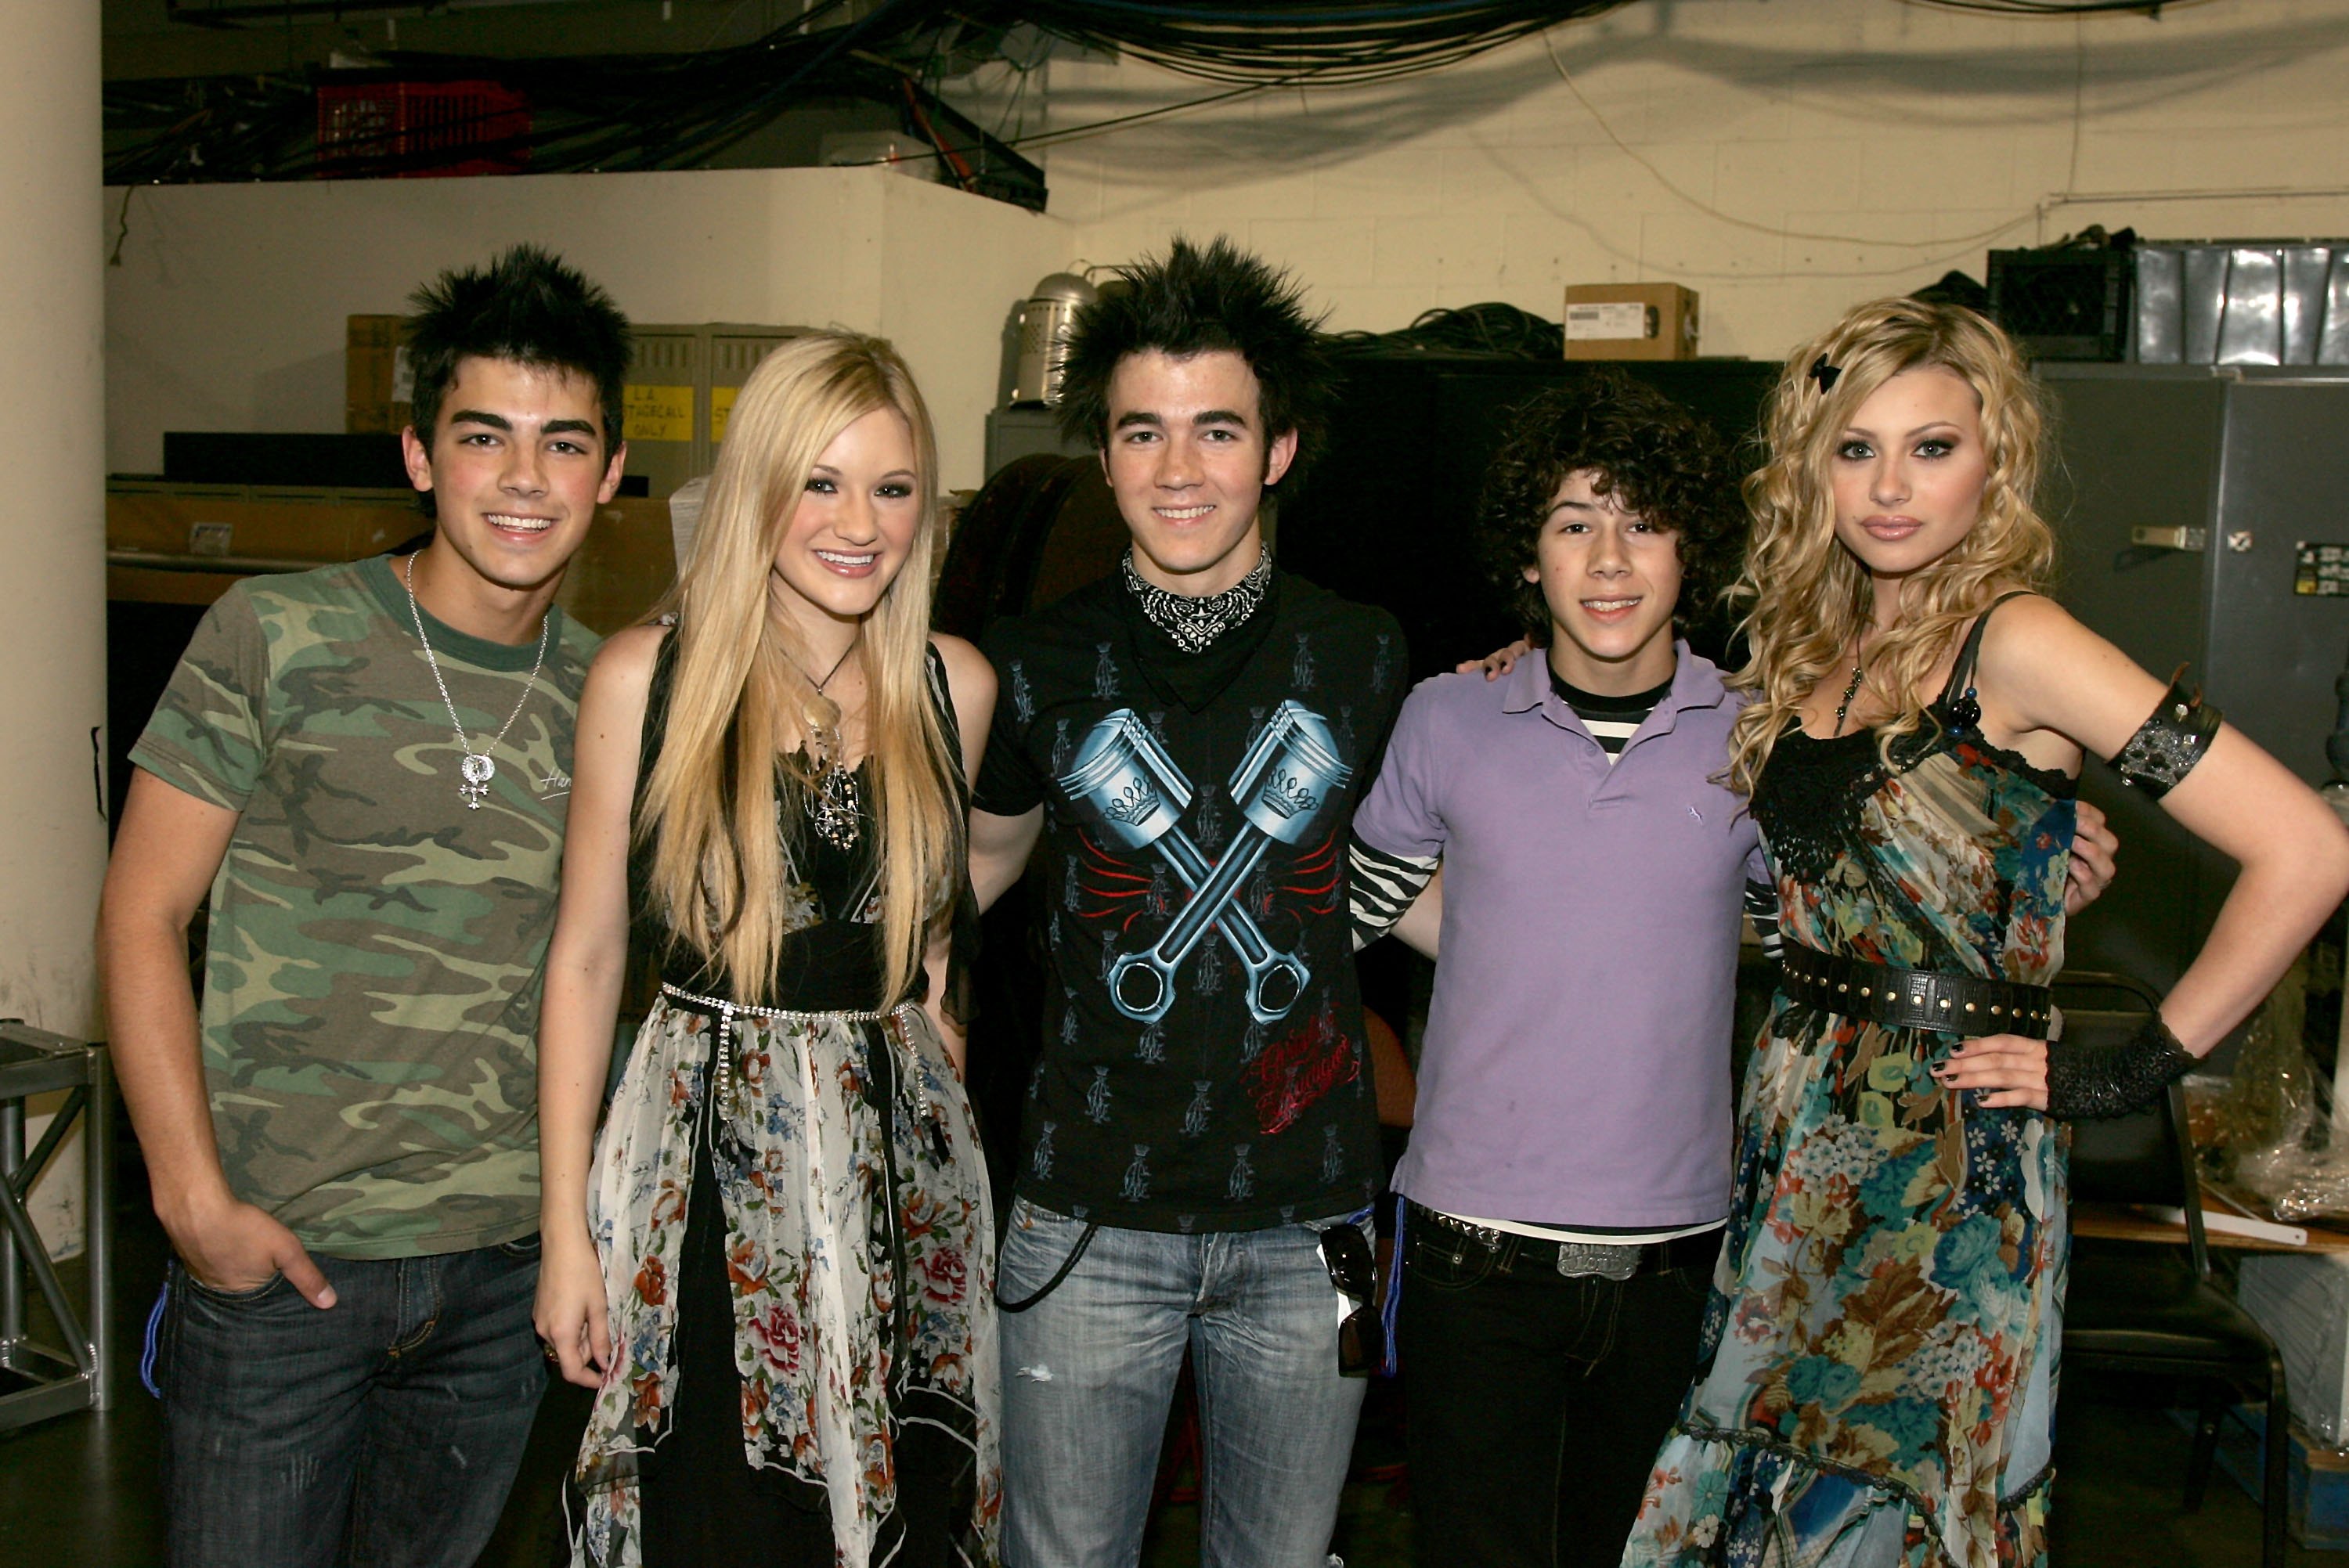 Pictured from left to right: Joe Jonas, AJ Michalka, Kevin Jonas, Nick Jonas, and Aly Michalka